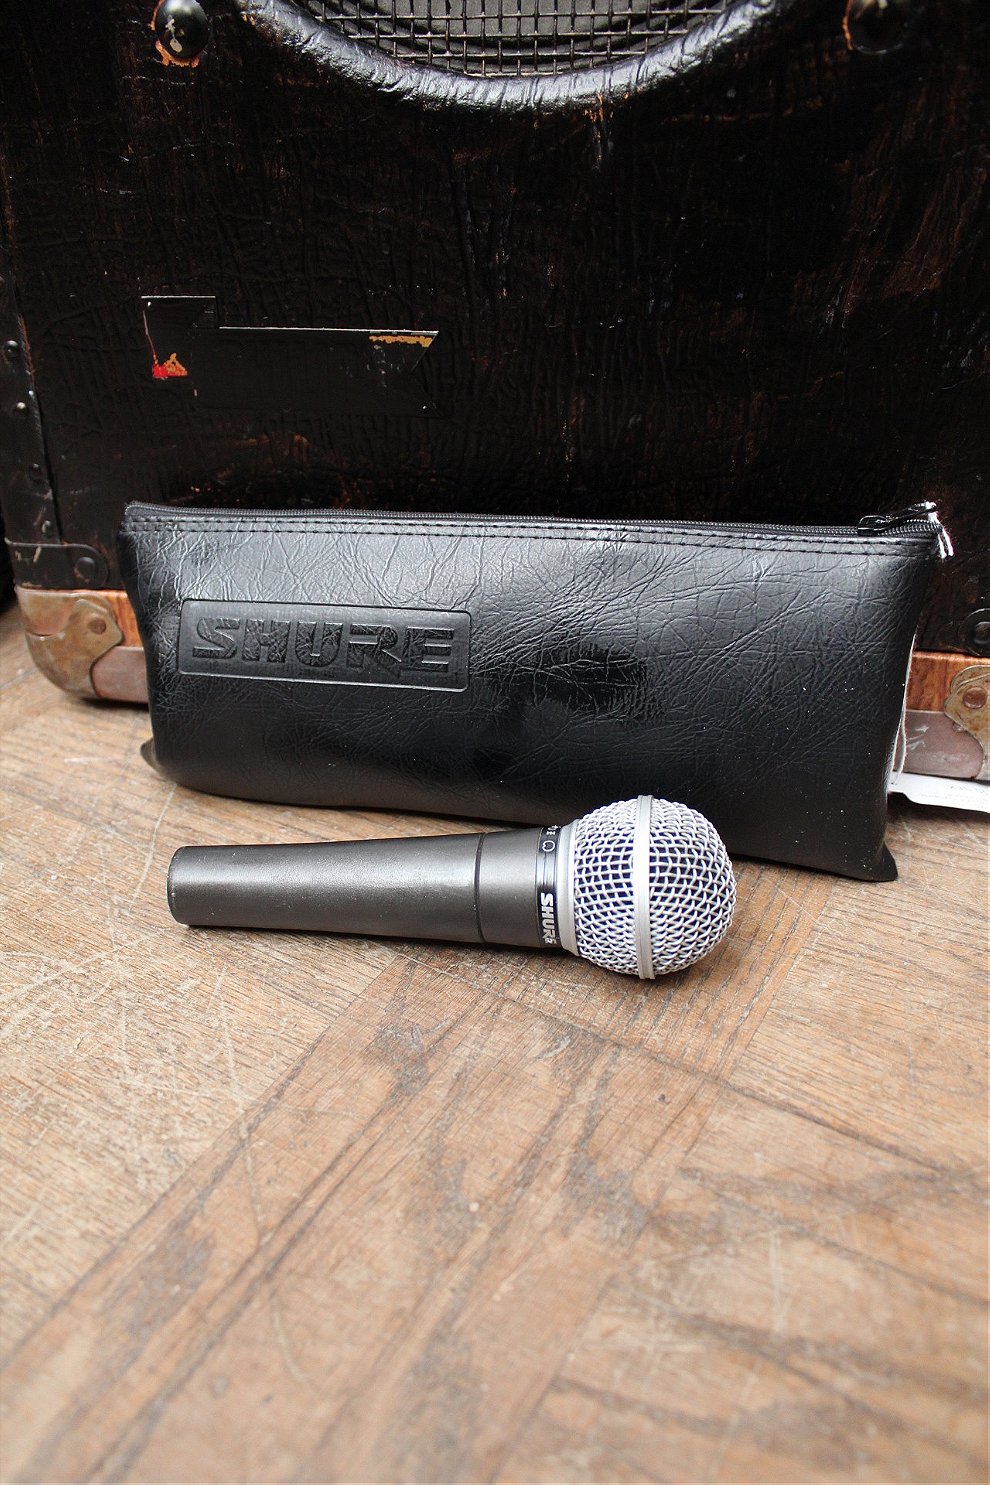 Shure SM58-LCE Dynamic microphone